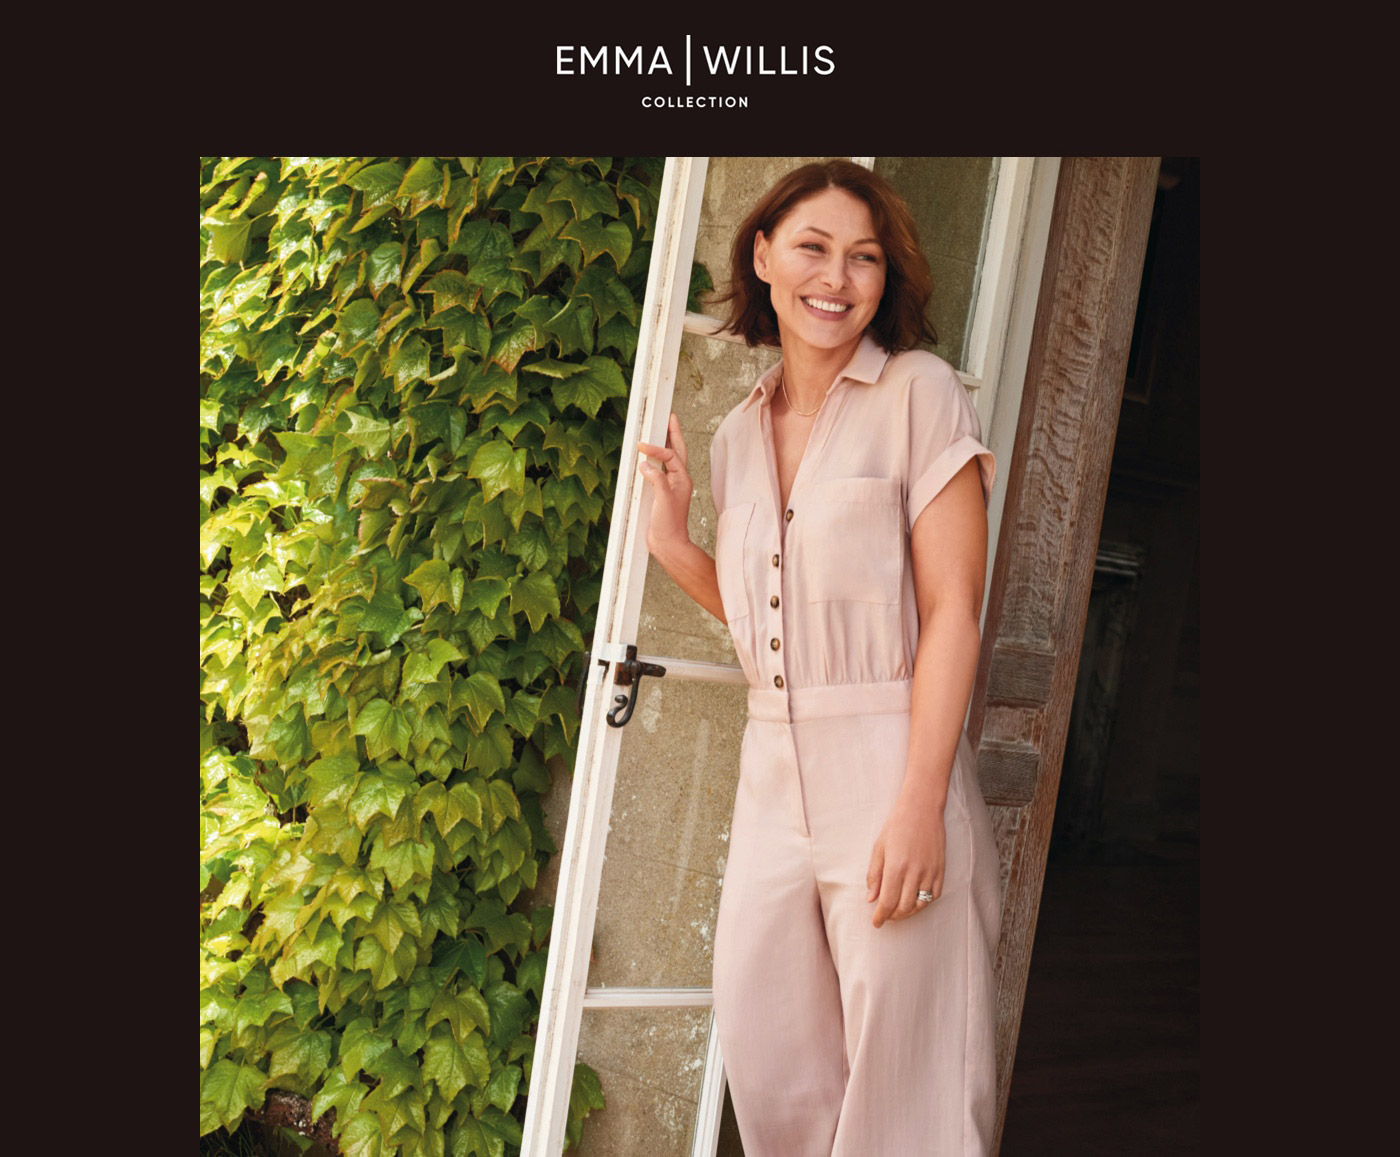 Emma Willis Collection at Next | Emma Loves | Next UK